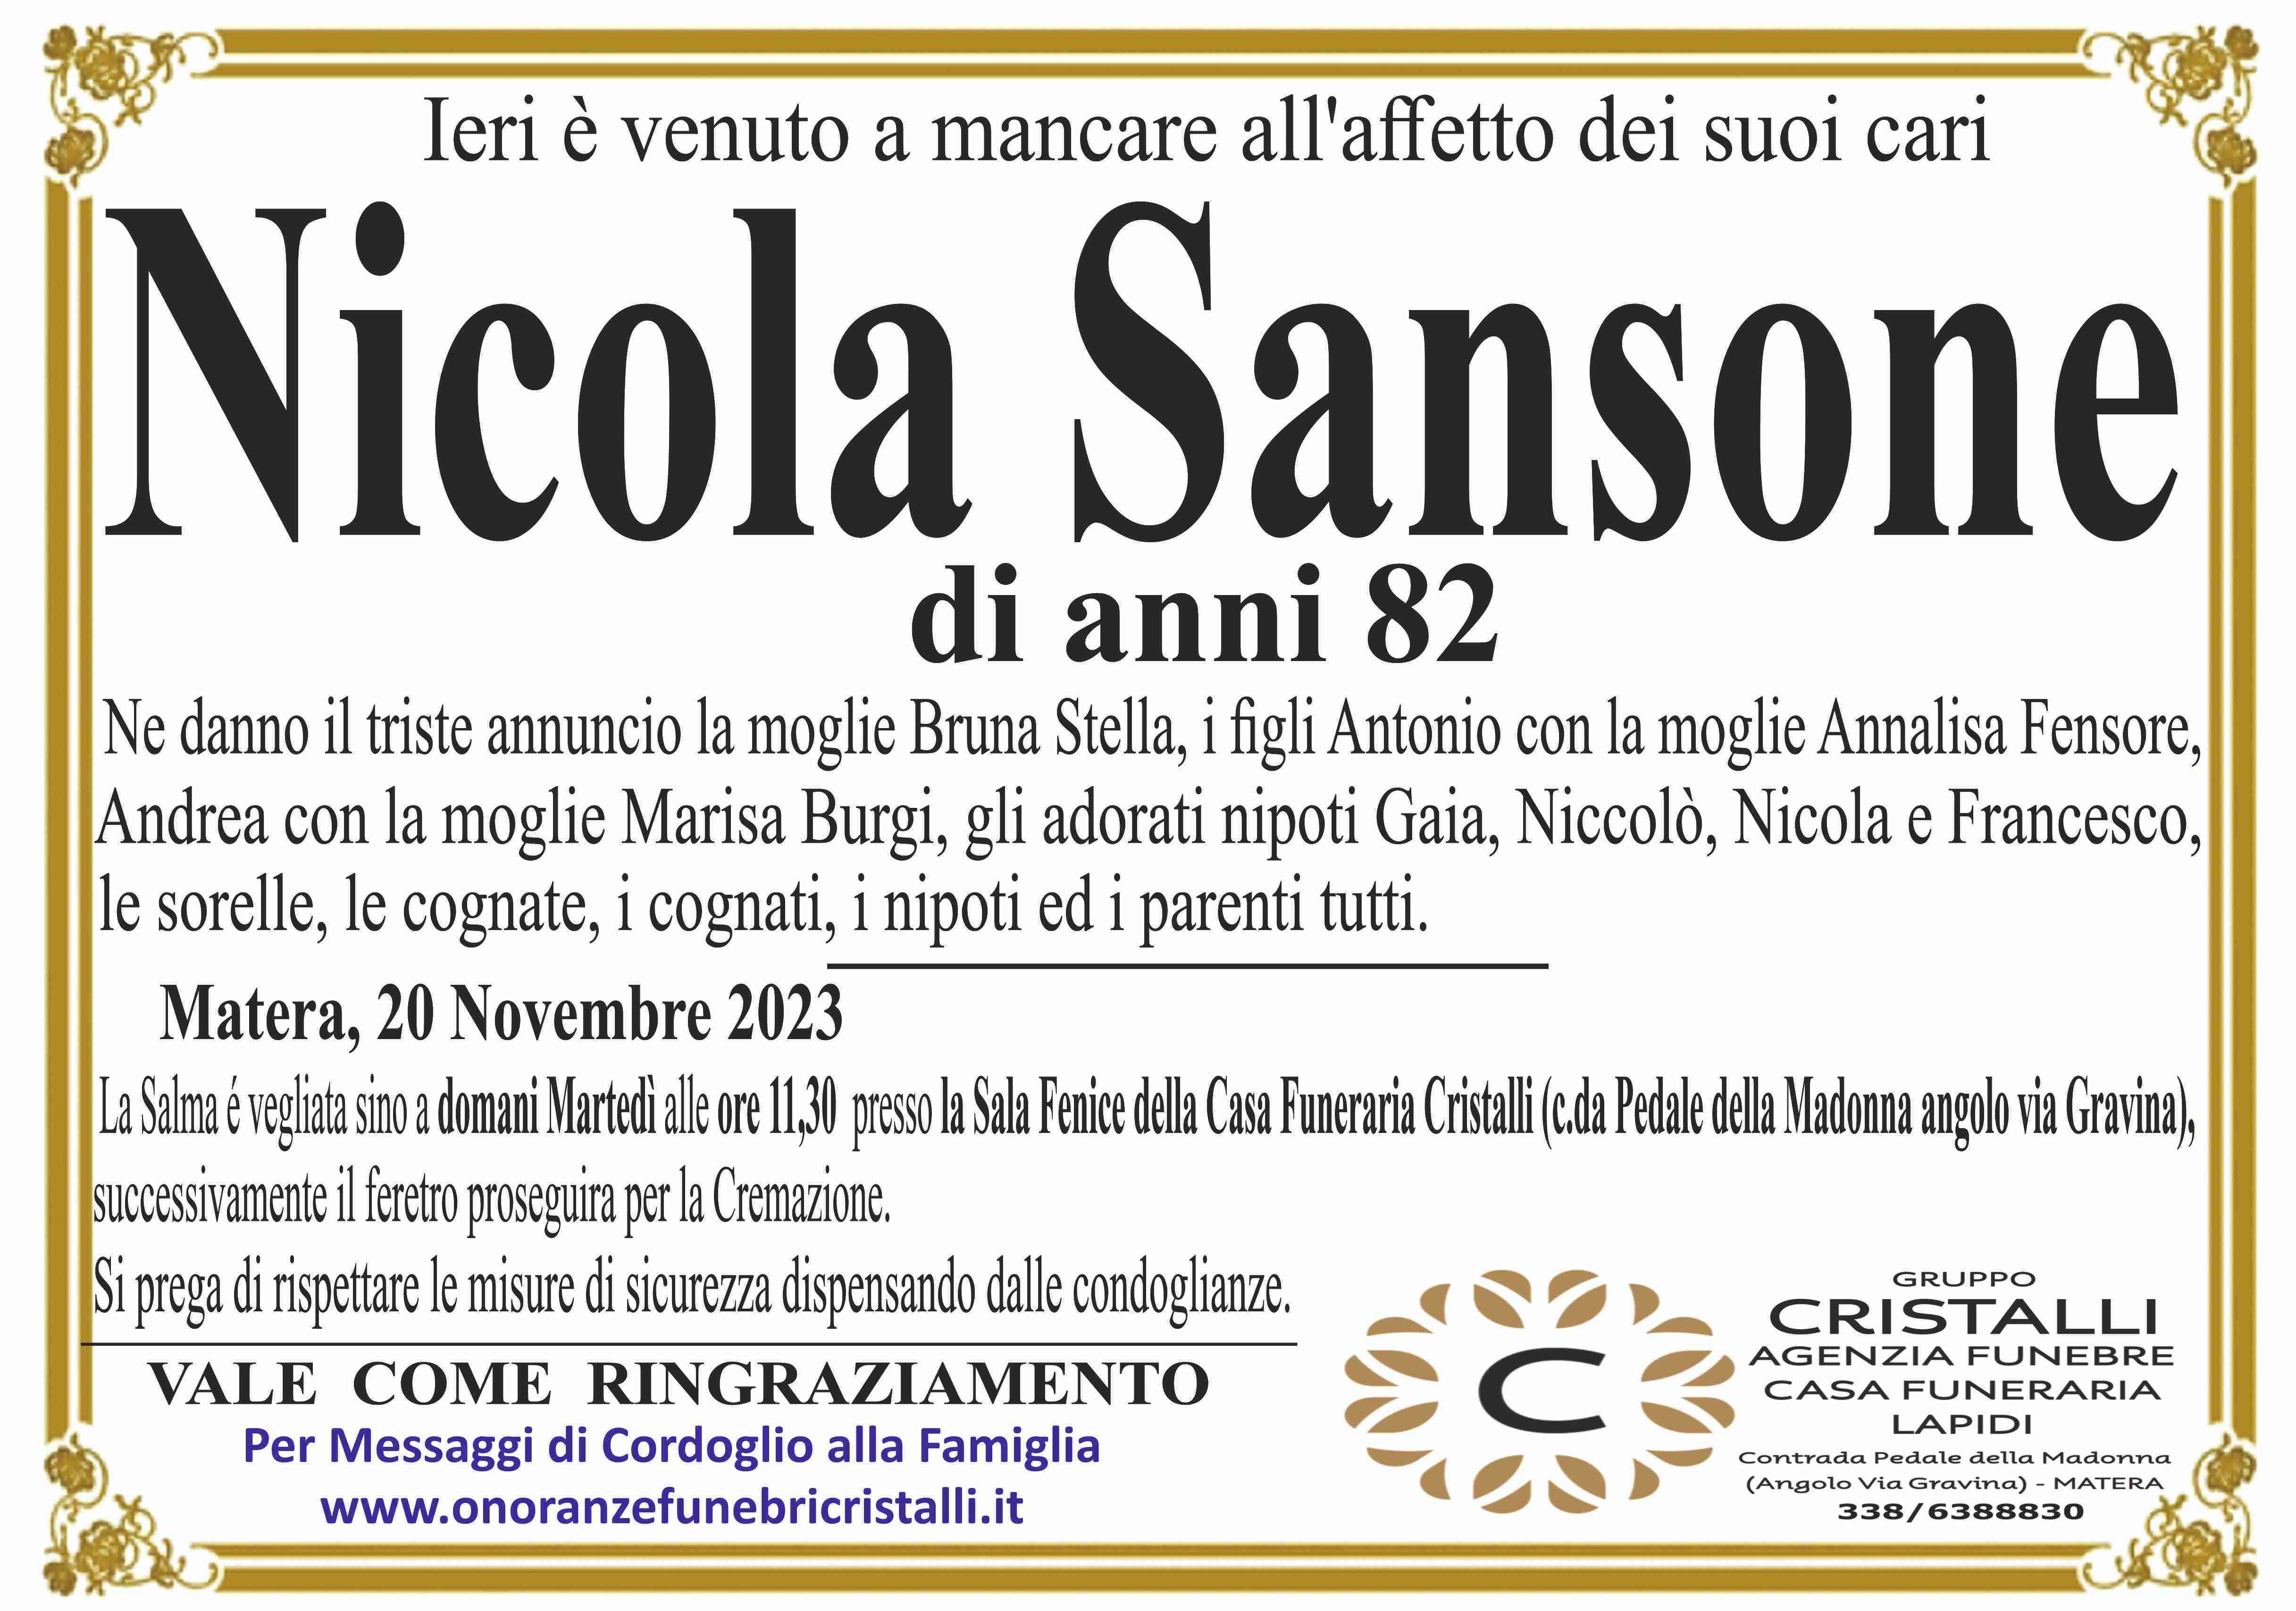 Nicola Sansone